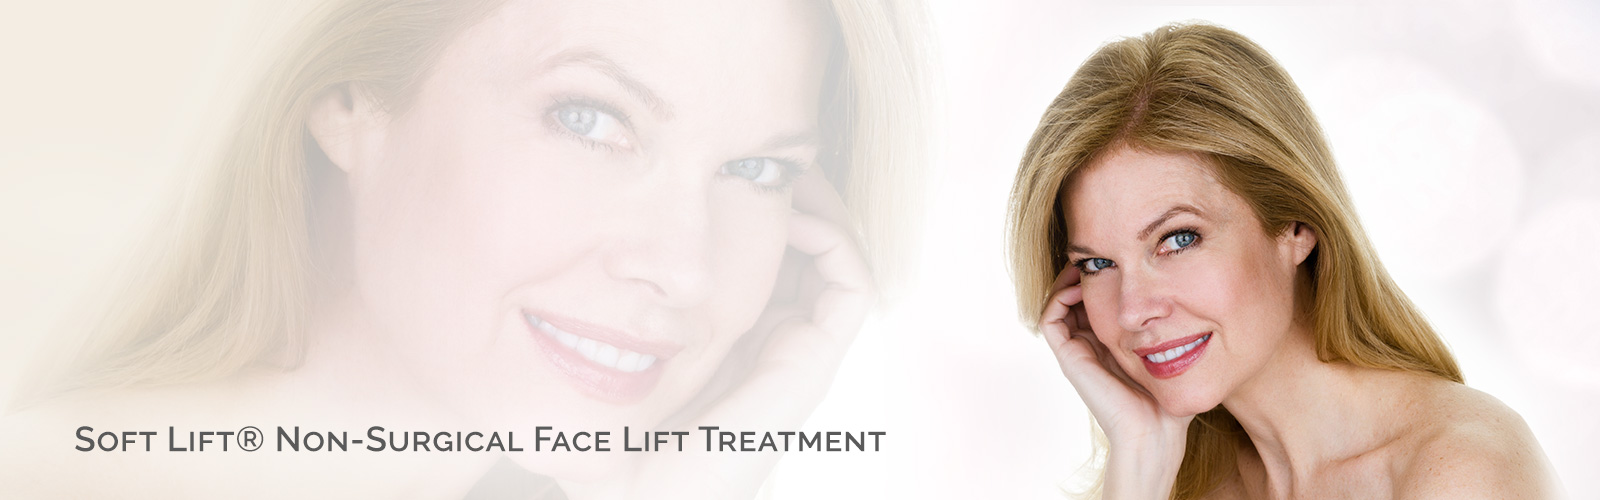 Soft Lift® Non-Surgical Face Lift Treatment